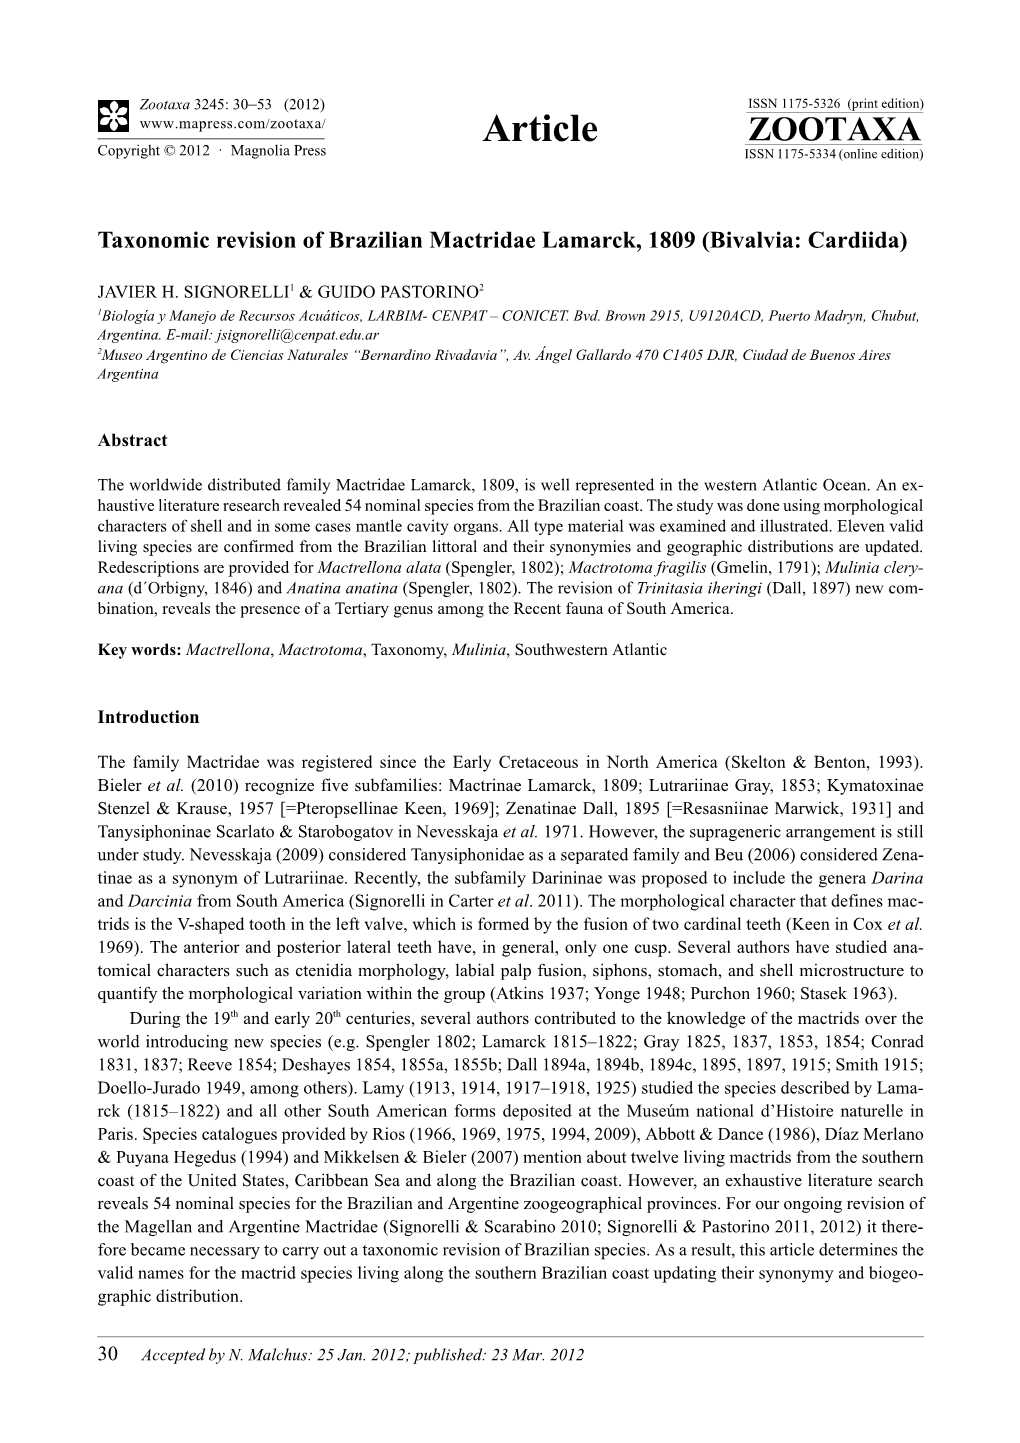 Taxonomic Revision of Brazilian Mactridae Lamarck, 1809 (Bivalvia: Cardiida)